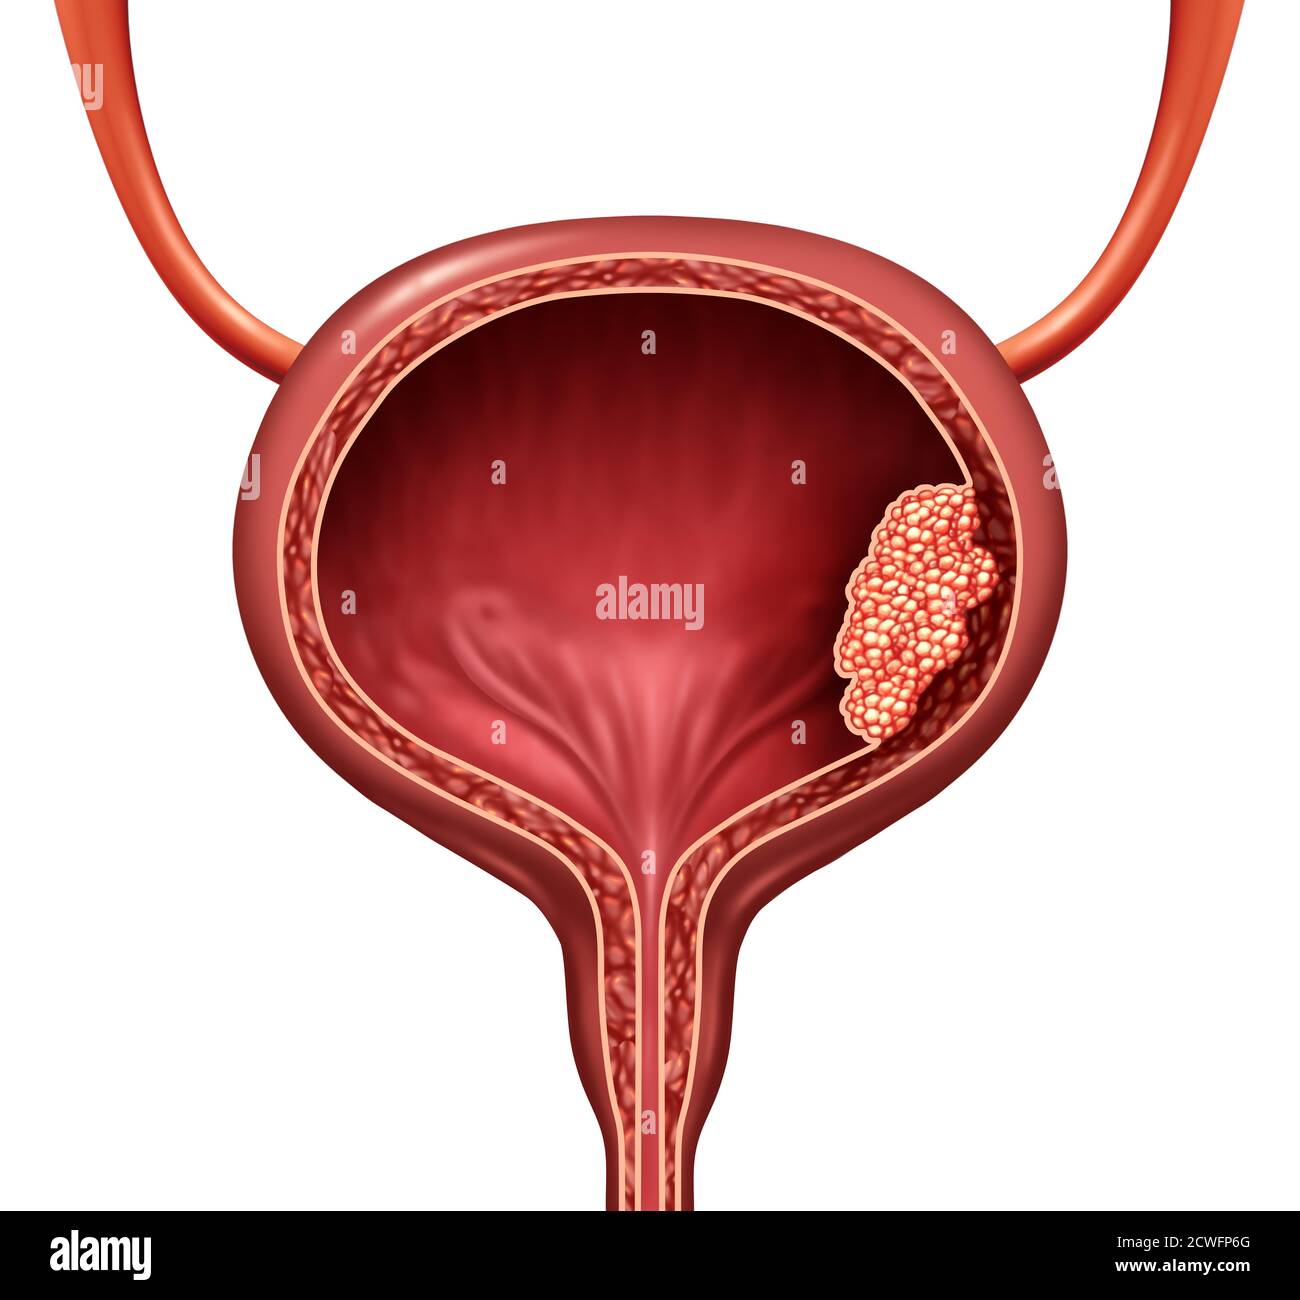 Human bladder cancer as a urinary anatomical organ disease and ...